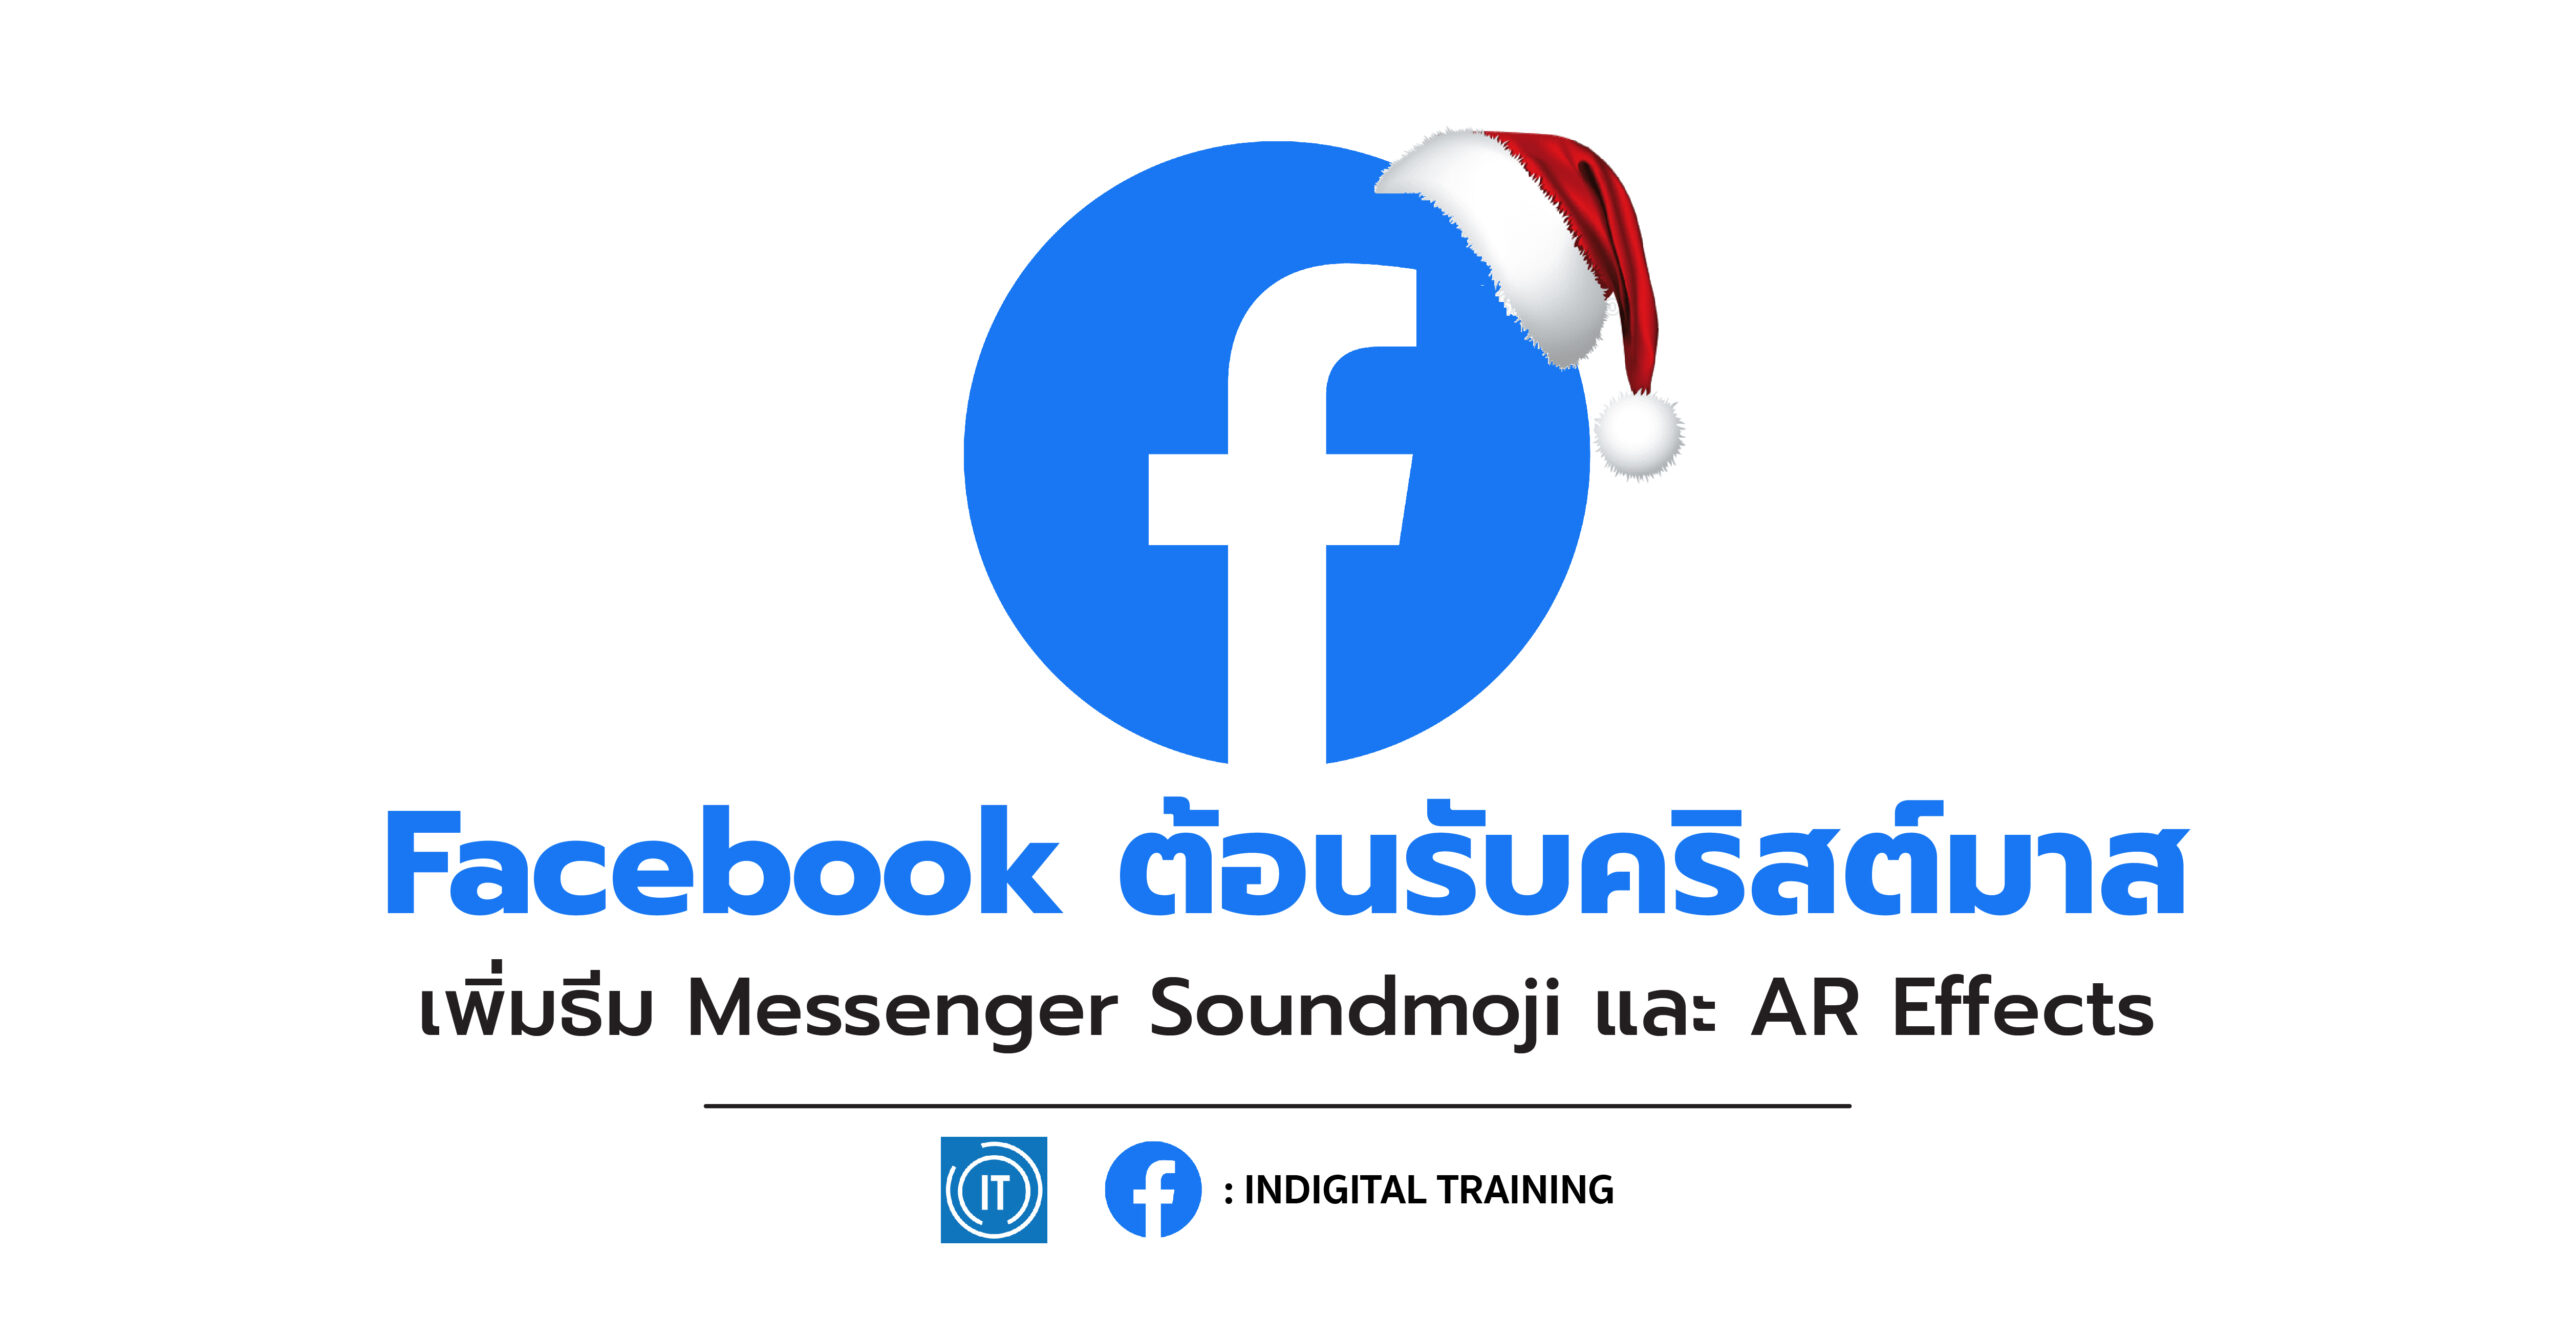 Facebook ต้อนรับคริสต์มาส เพิ่มธีม Messenger Soundmoji และ AR Effects